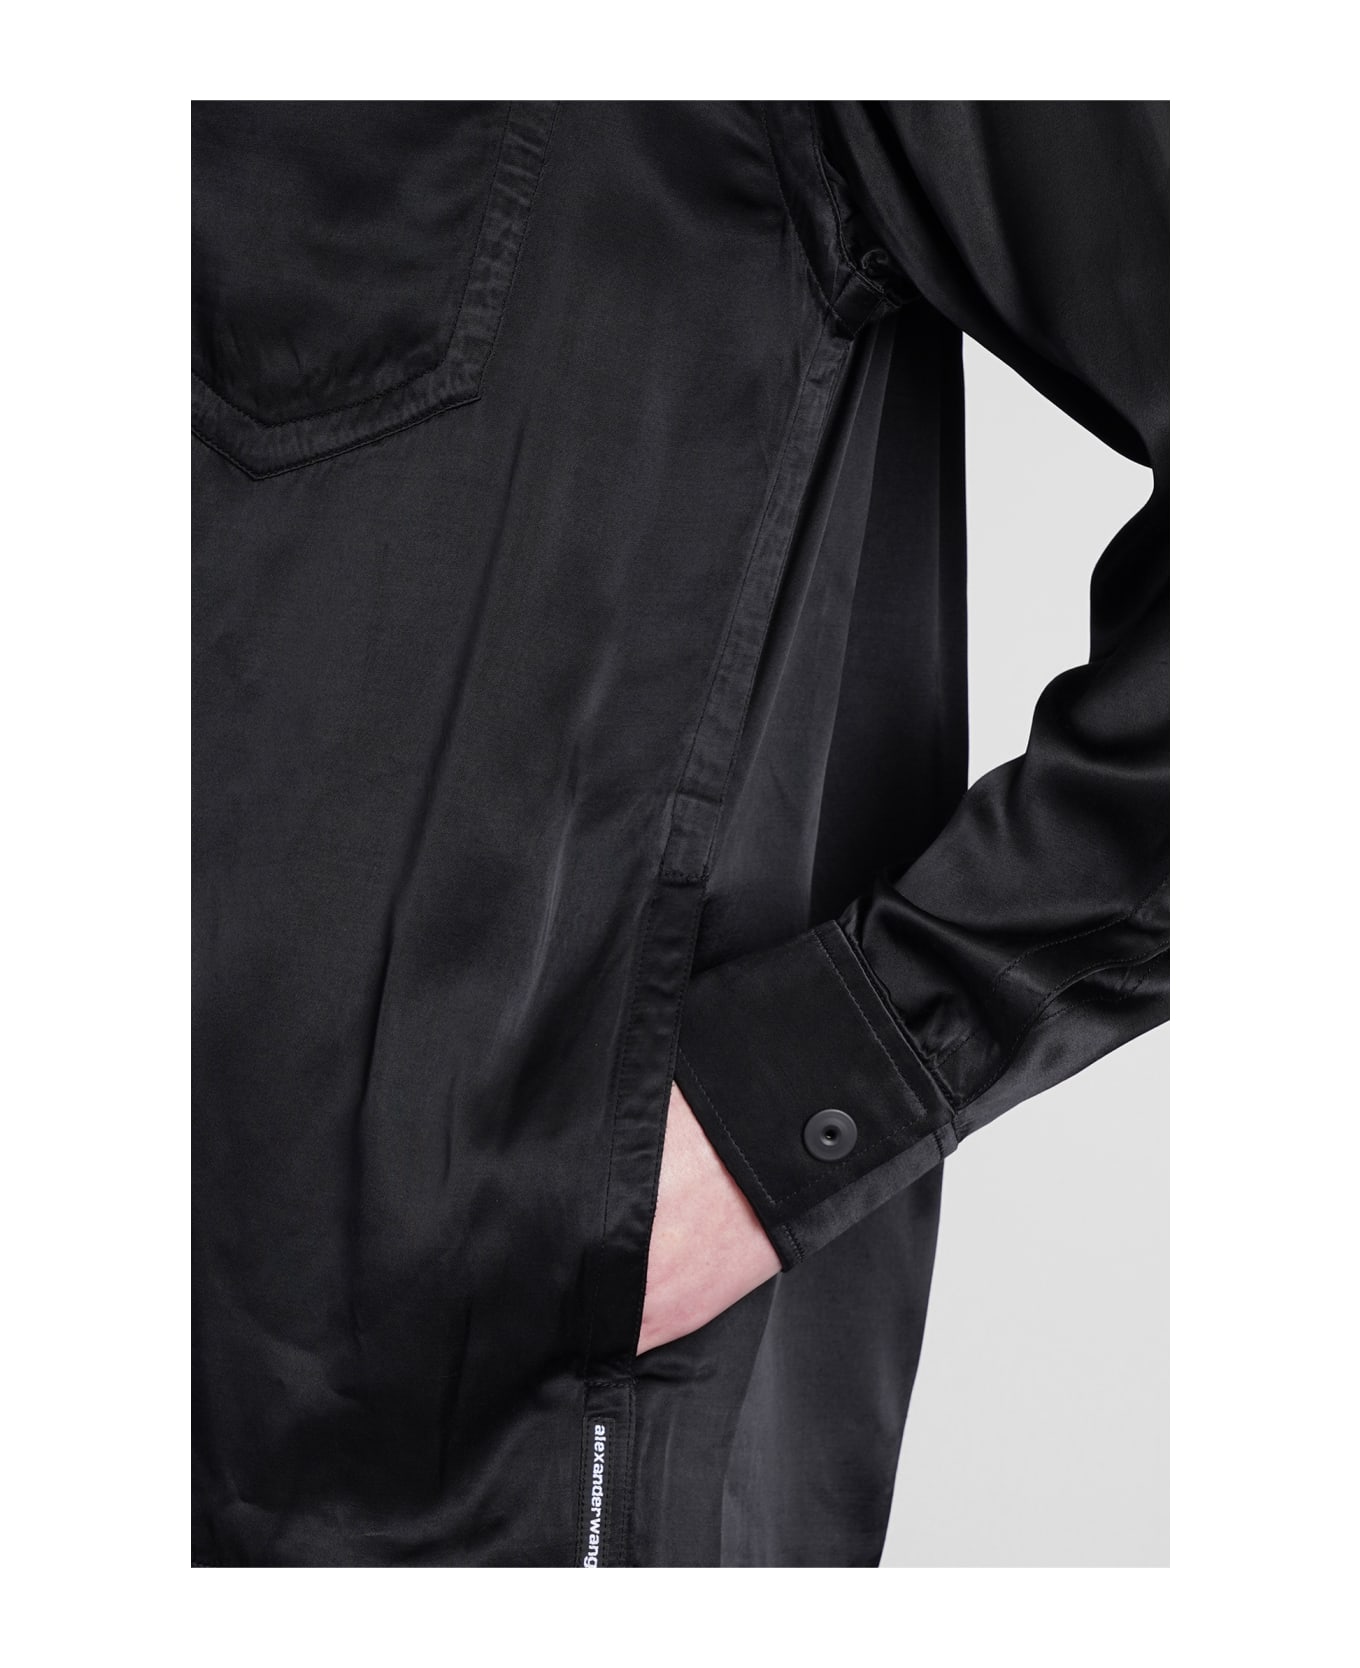 Alexander Wang Shirt In Black Viscose - black ジャケット